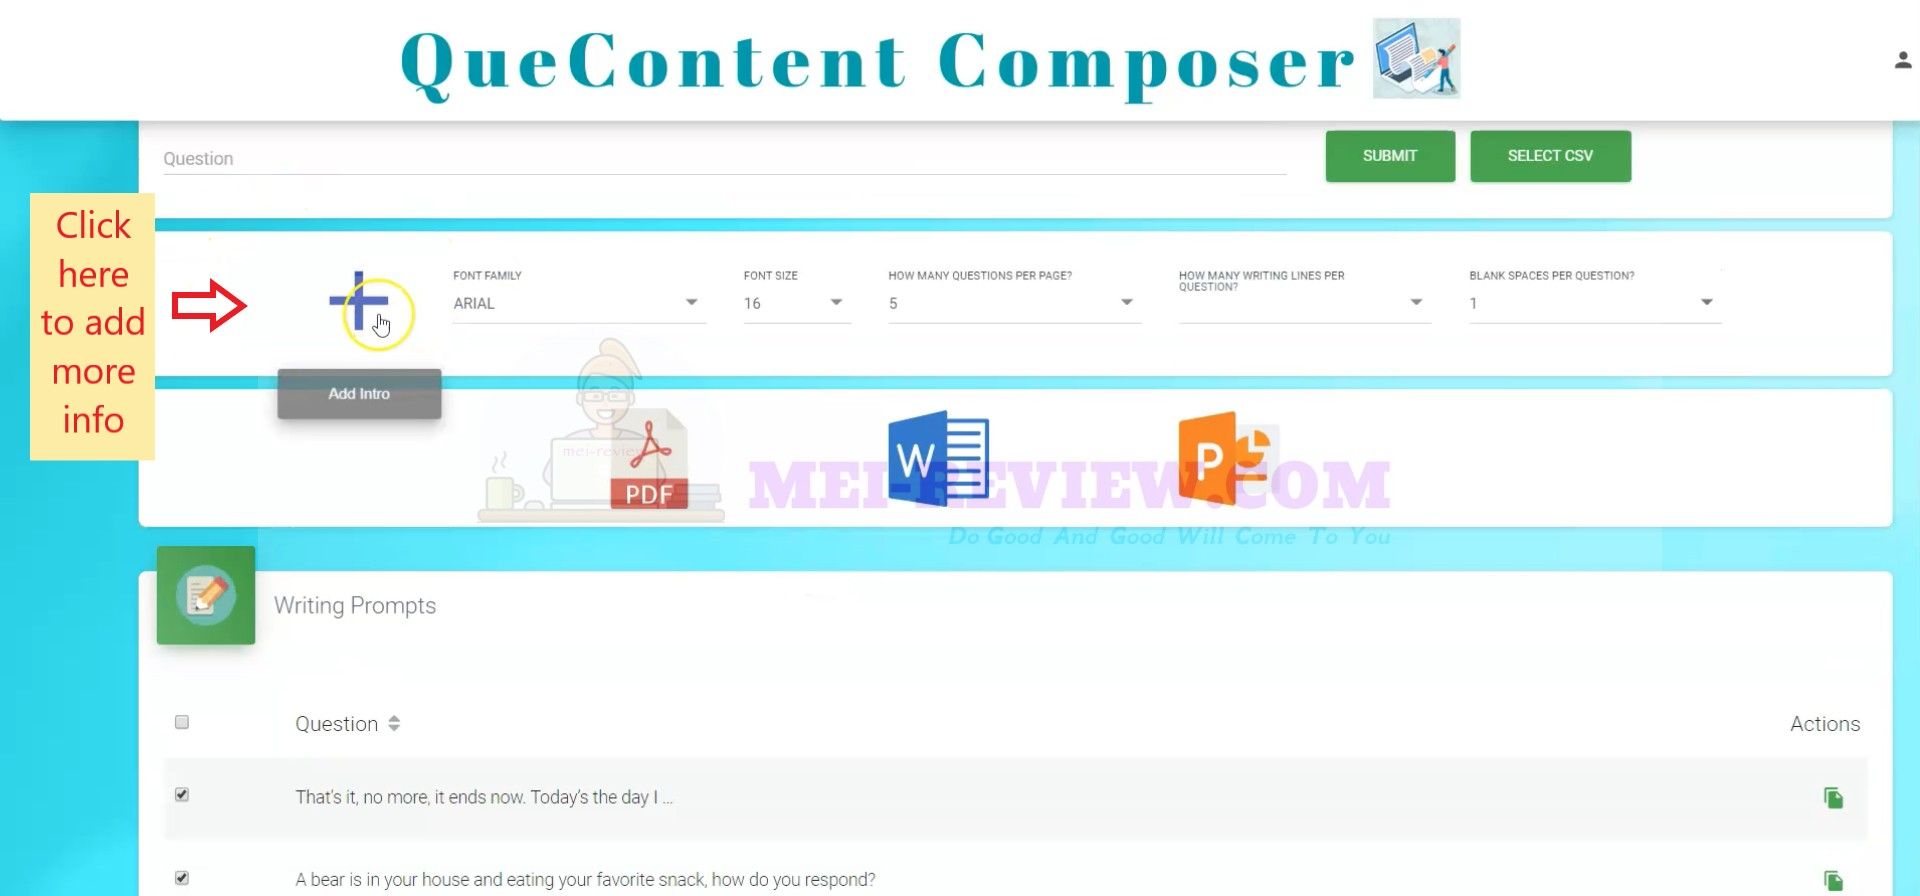 QueContent-Composer-how-to-use-5